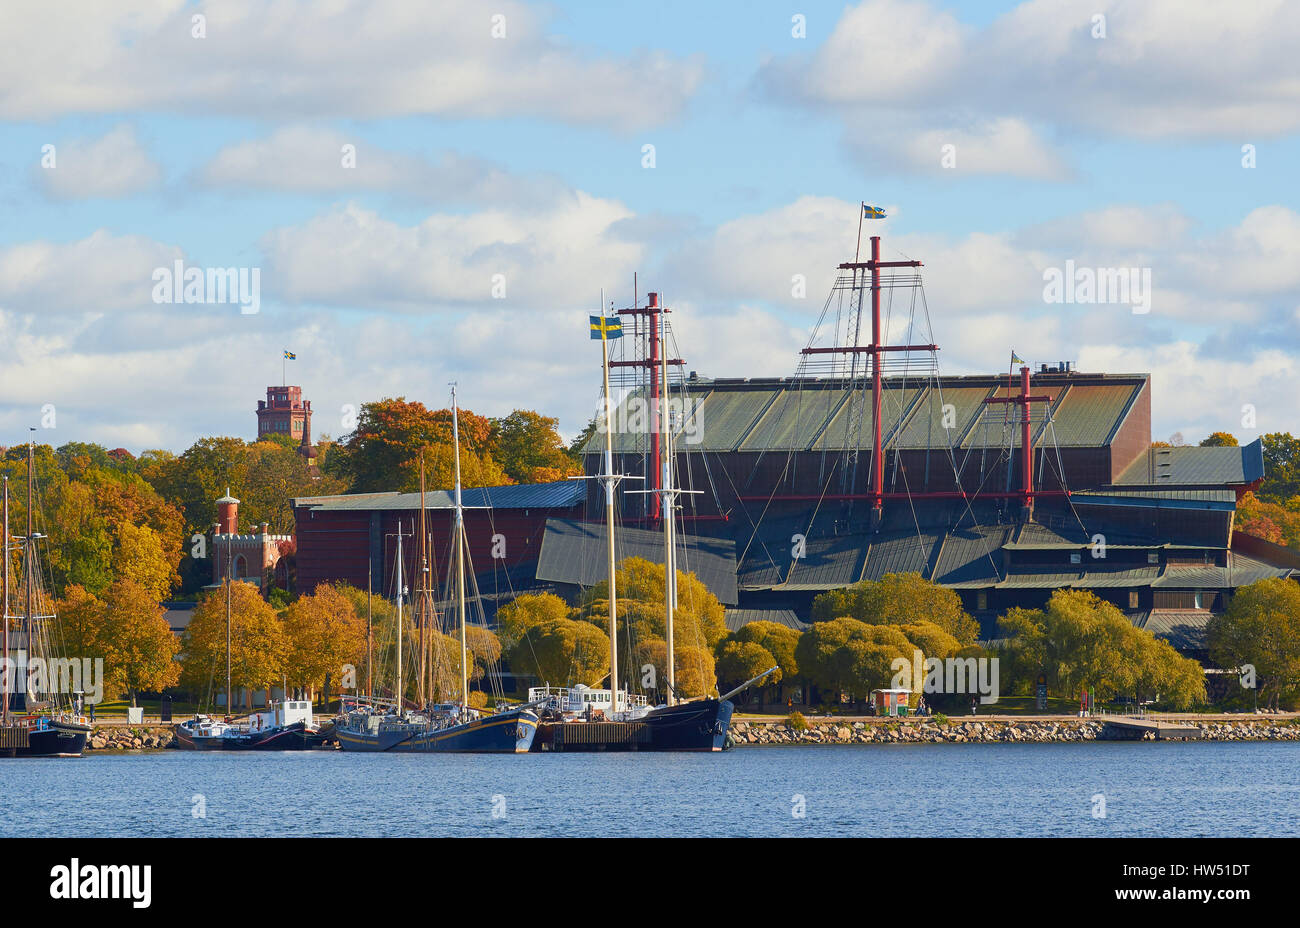 Vasa Museum (Vasamuseet) maritime museum, Djurgarden, Stockholm. Displays restored 17th century warship Vasa which sank on its maiden voyage in 1628. Stock Photo